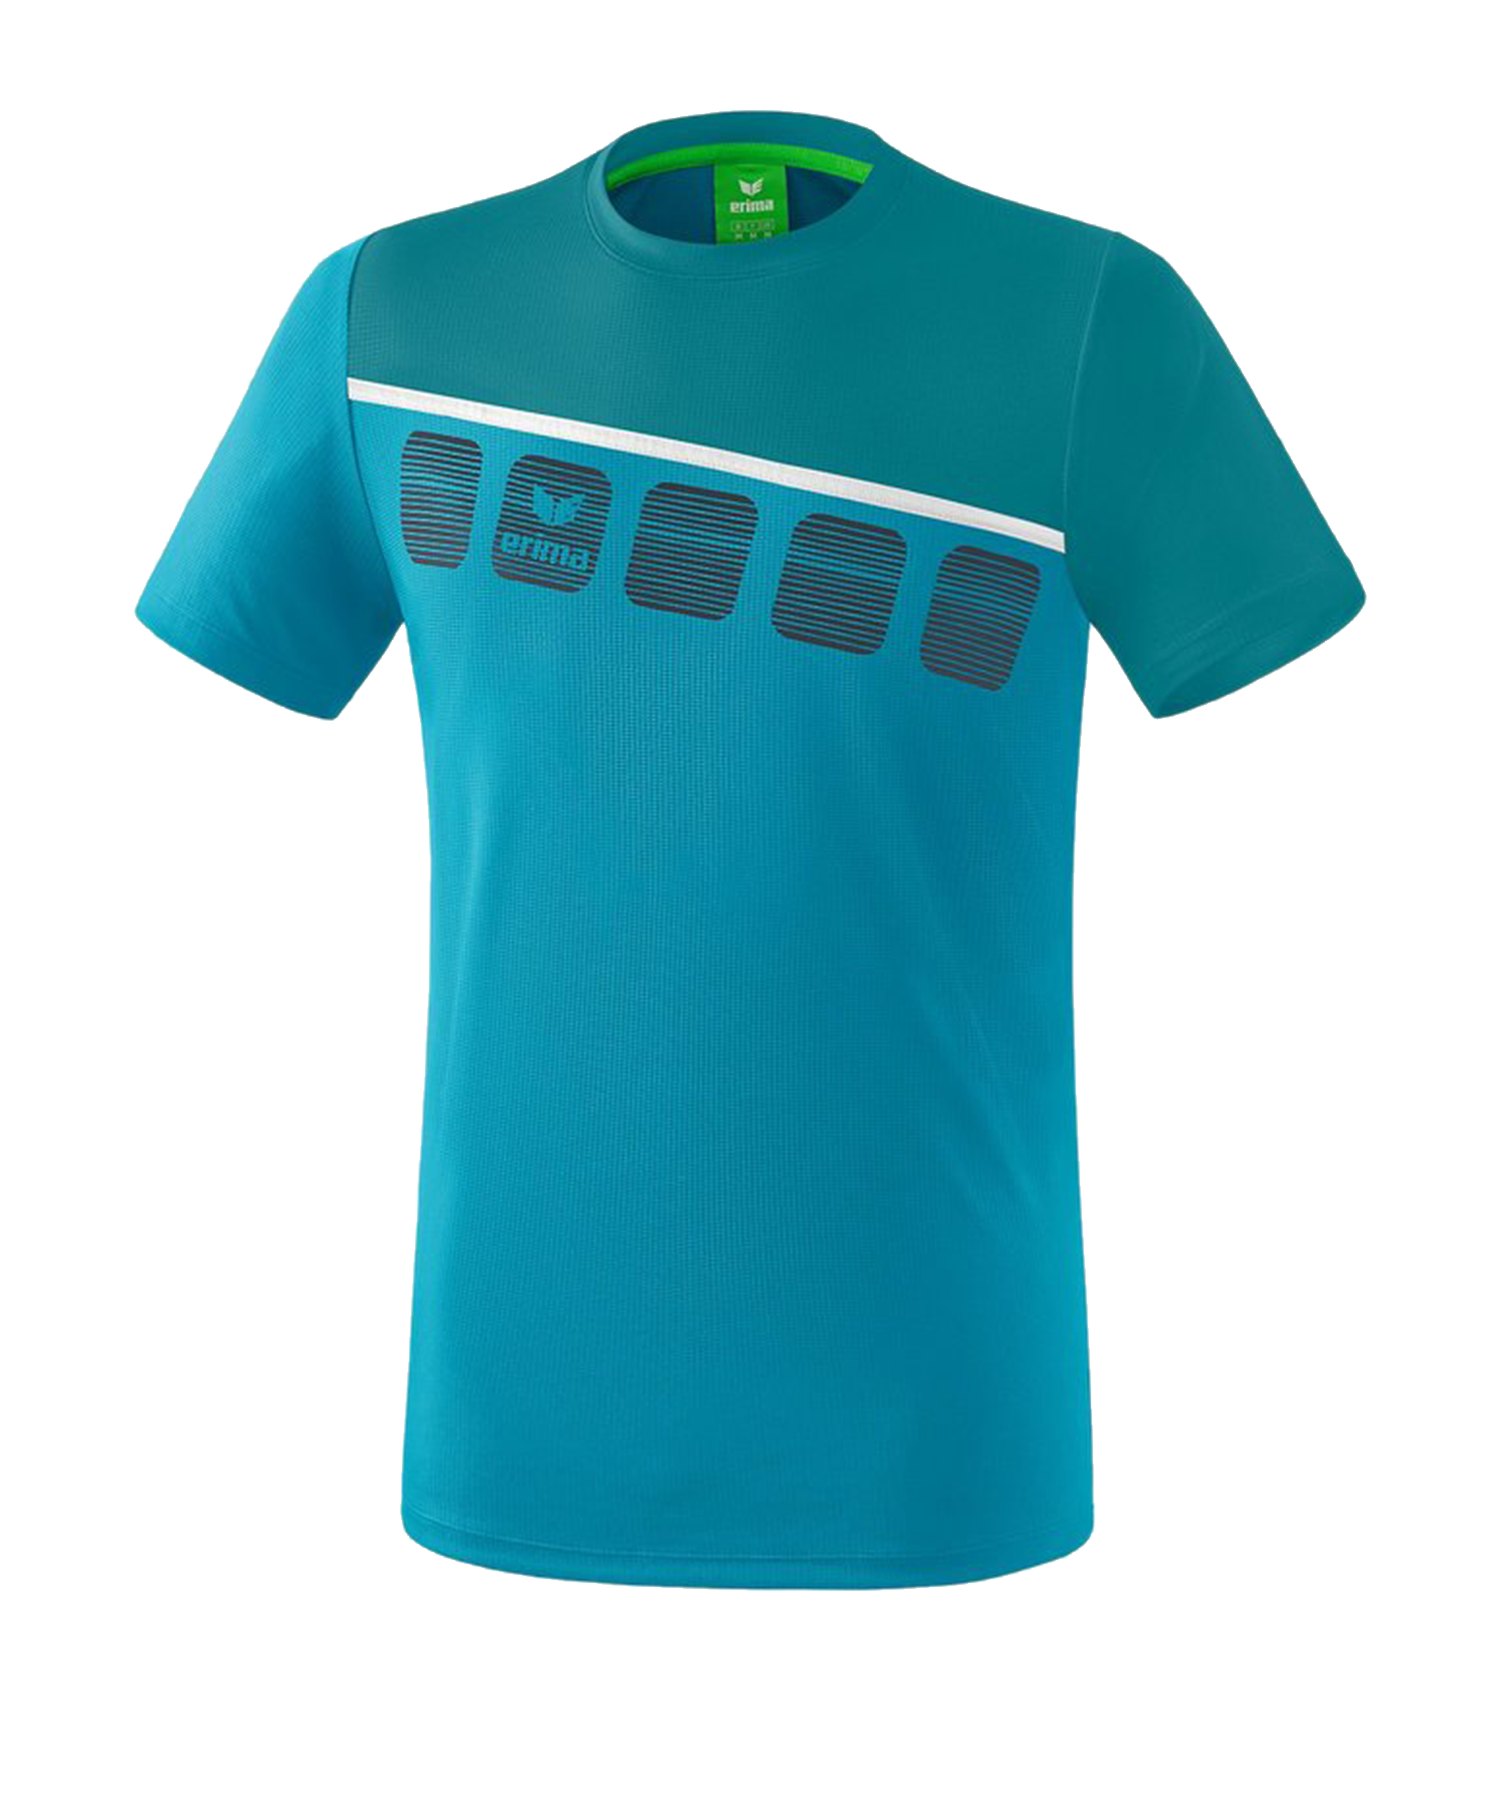 Erima 5-C T-Shirt Blau Weiss - Blau